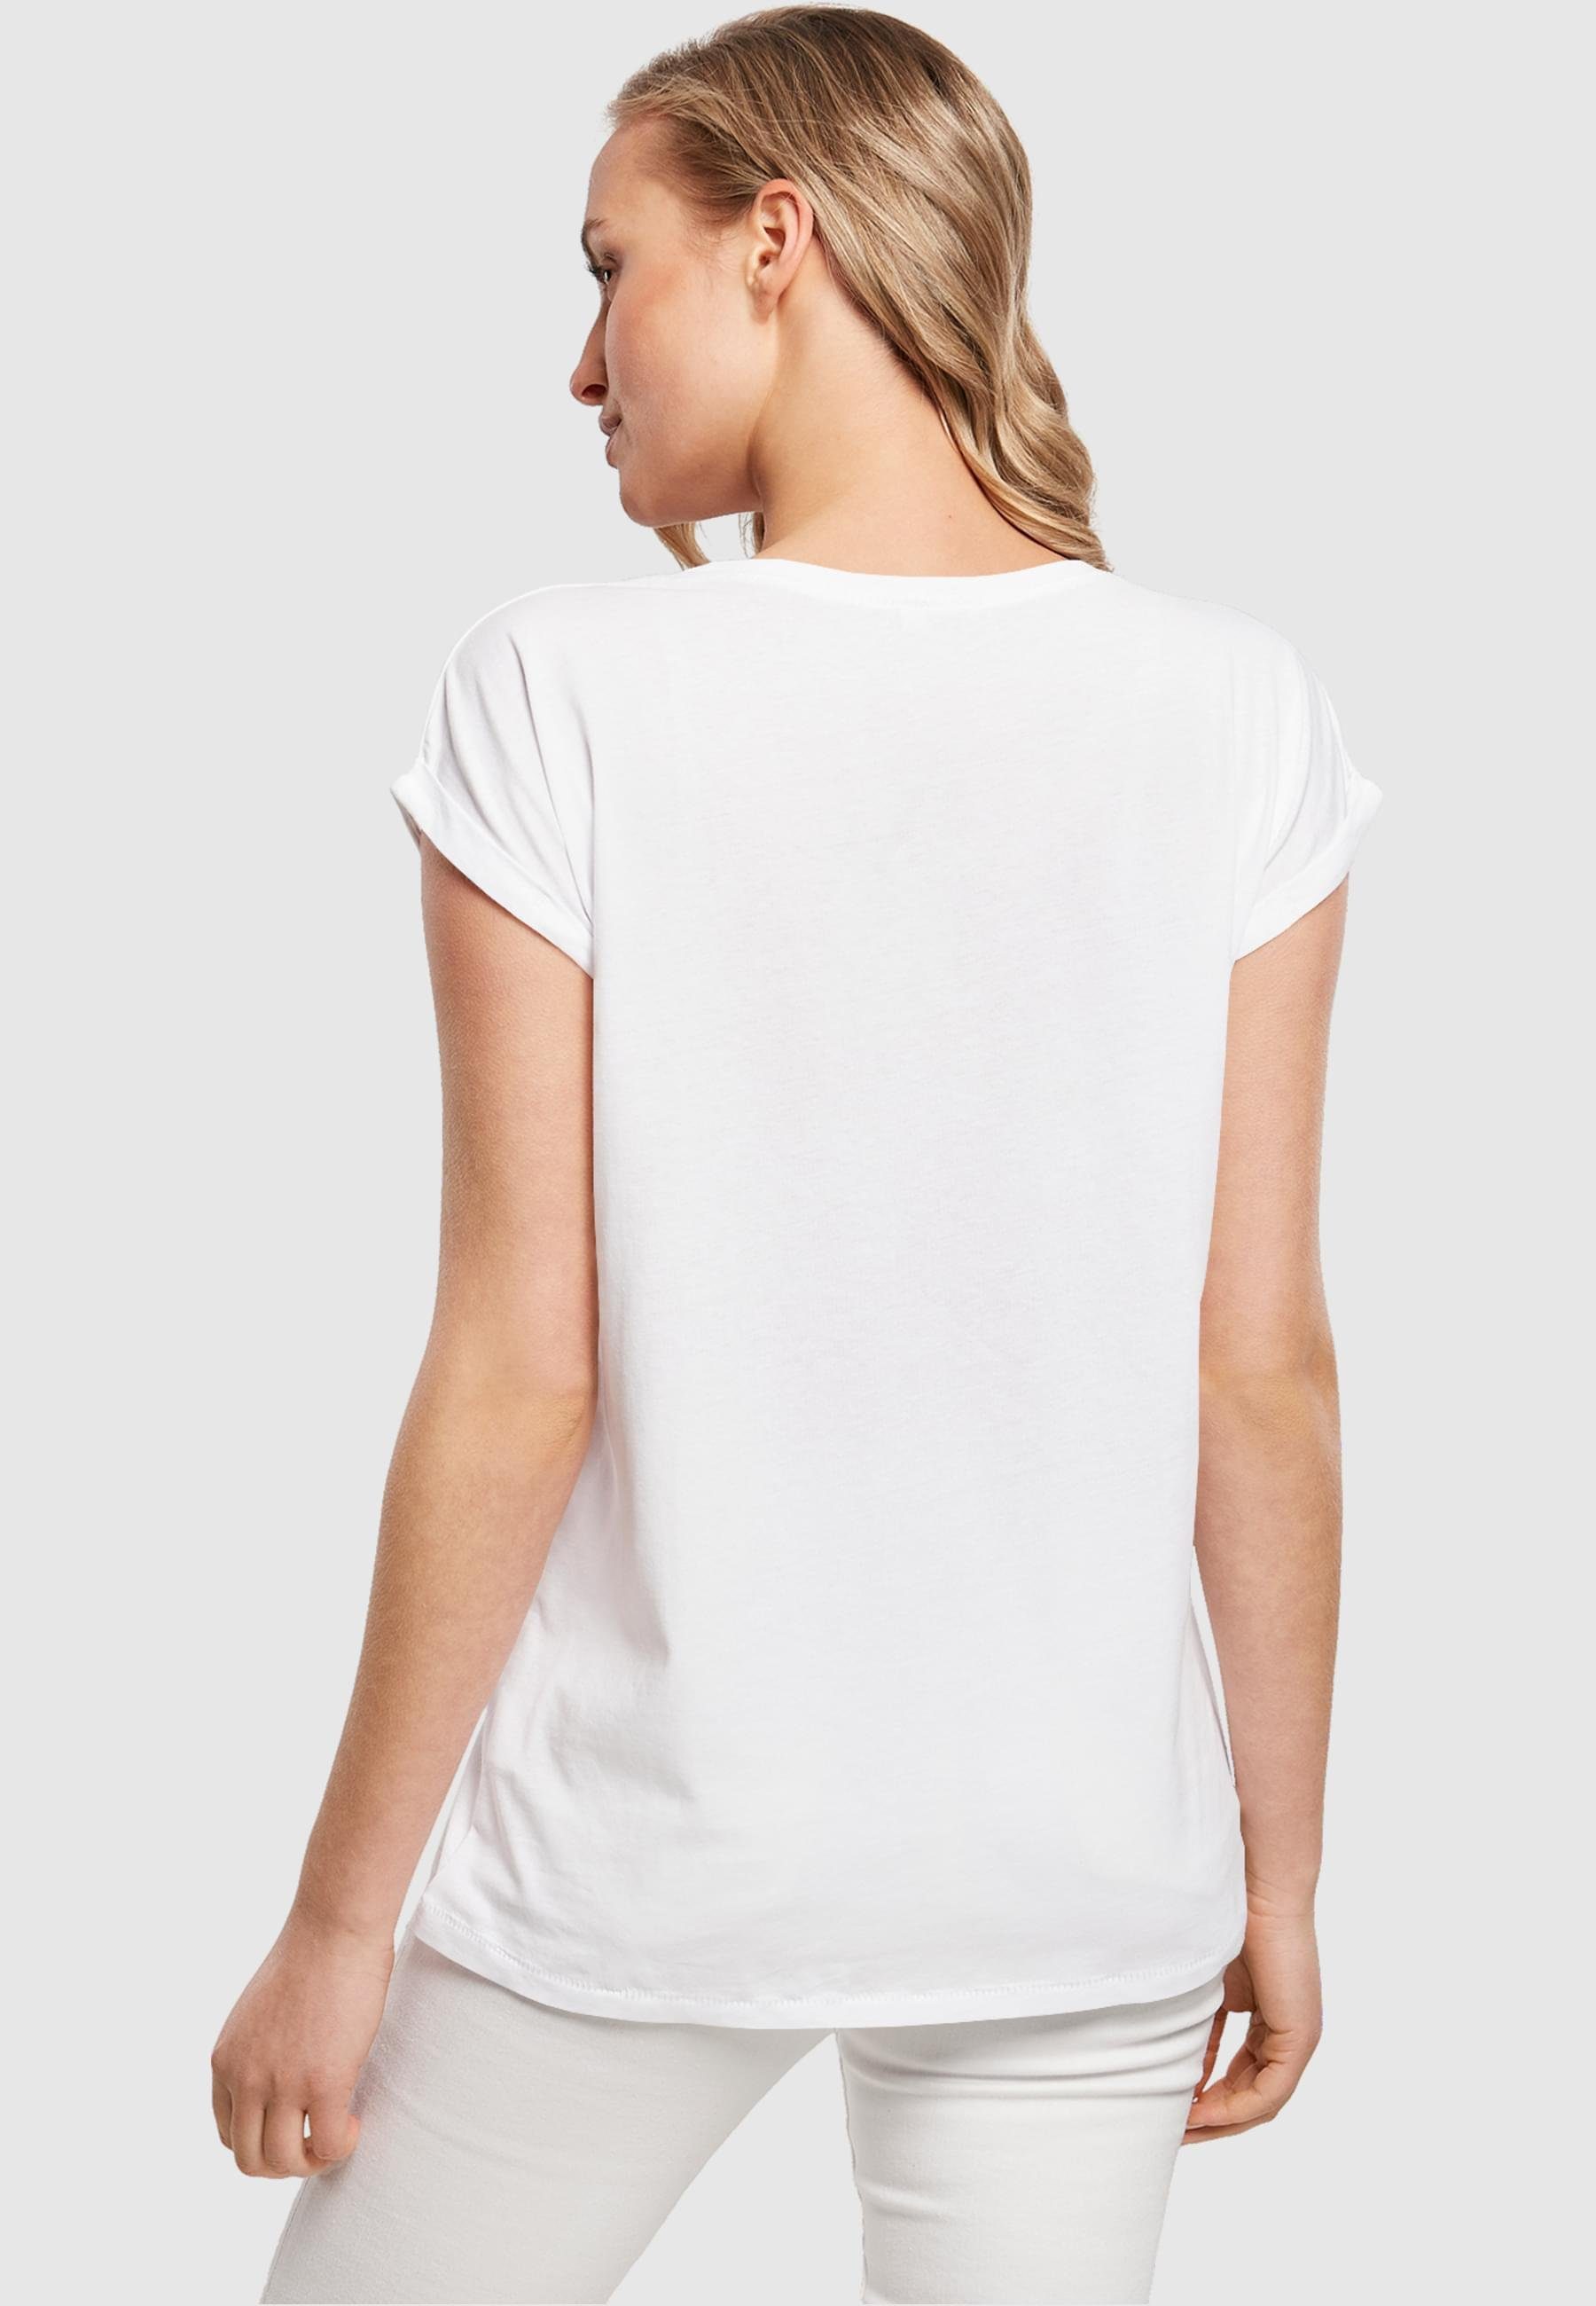 T-Shirt (1-tlg) Limited T-Shirt Edition white Damen Layla - Merchcode Ladies